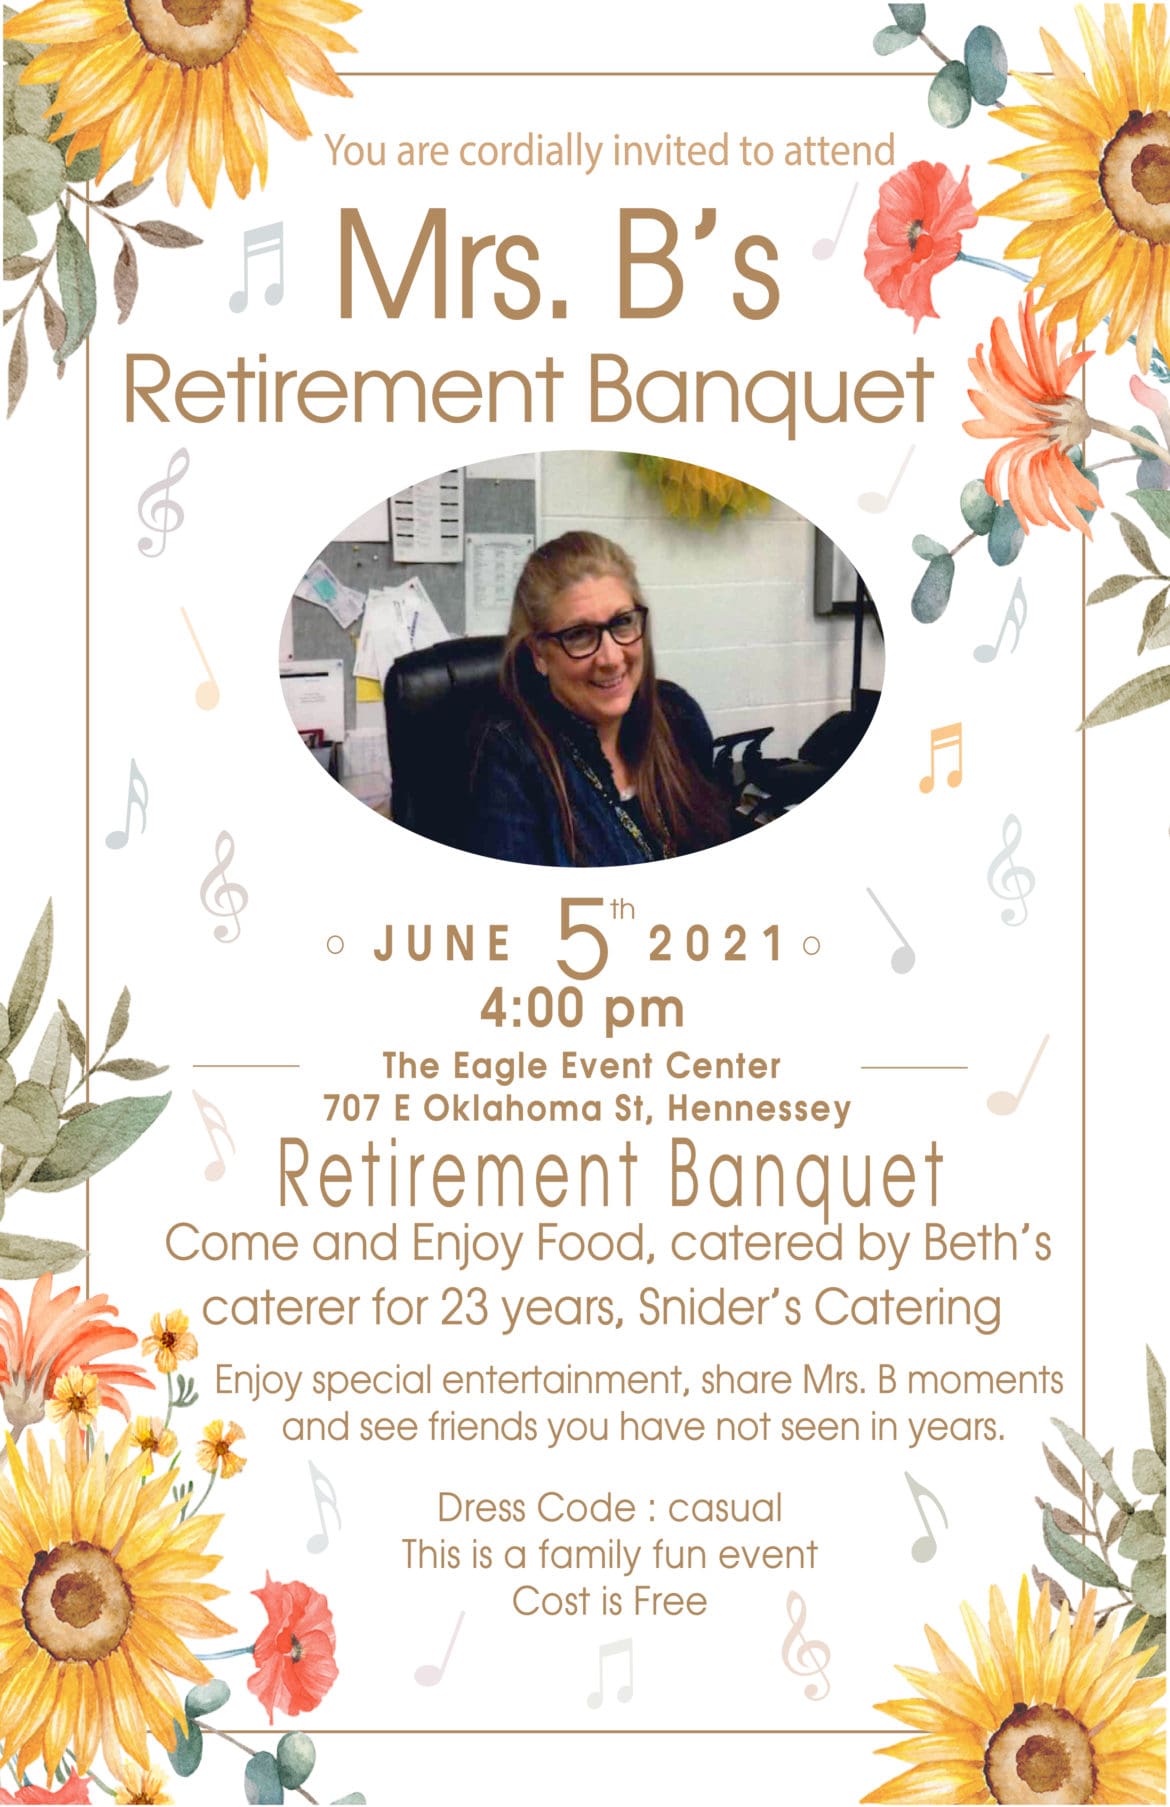 Mrs. B’s Retirement Banquet June 5